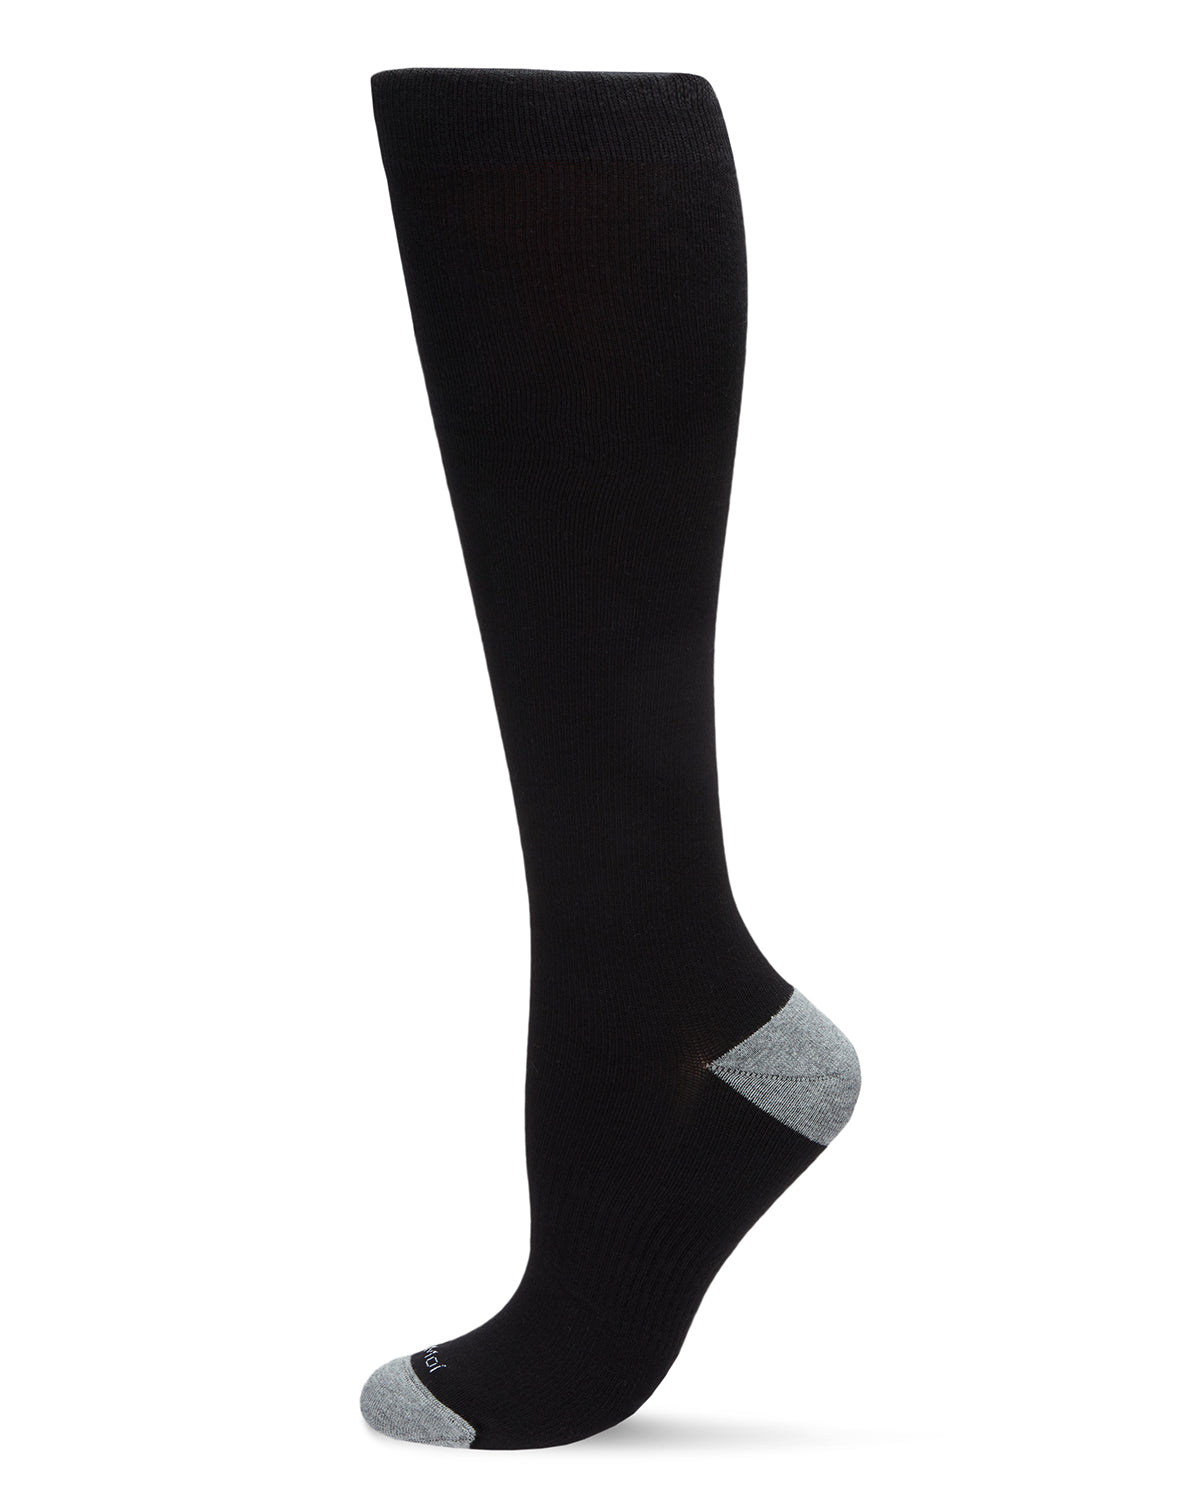 WellFit 15-20mmHg Off Black Cotton Compression Socks – MeMoi